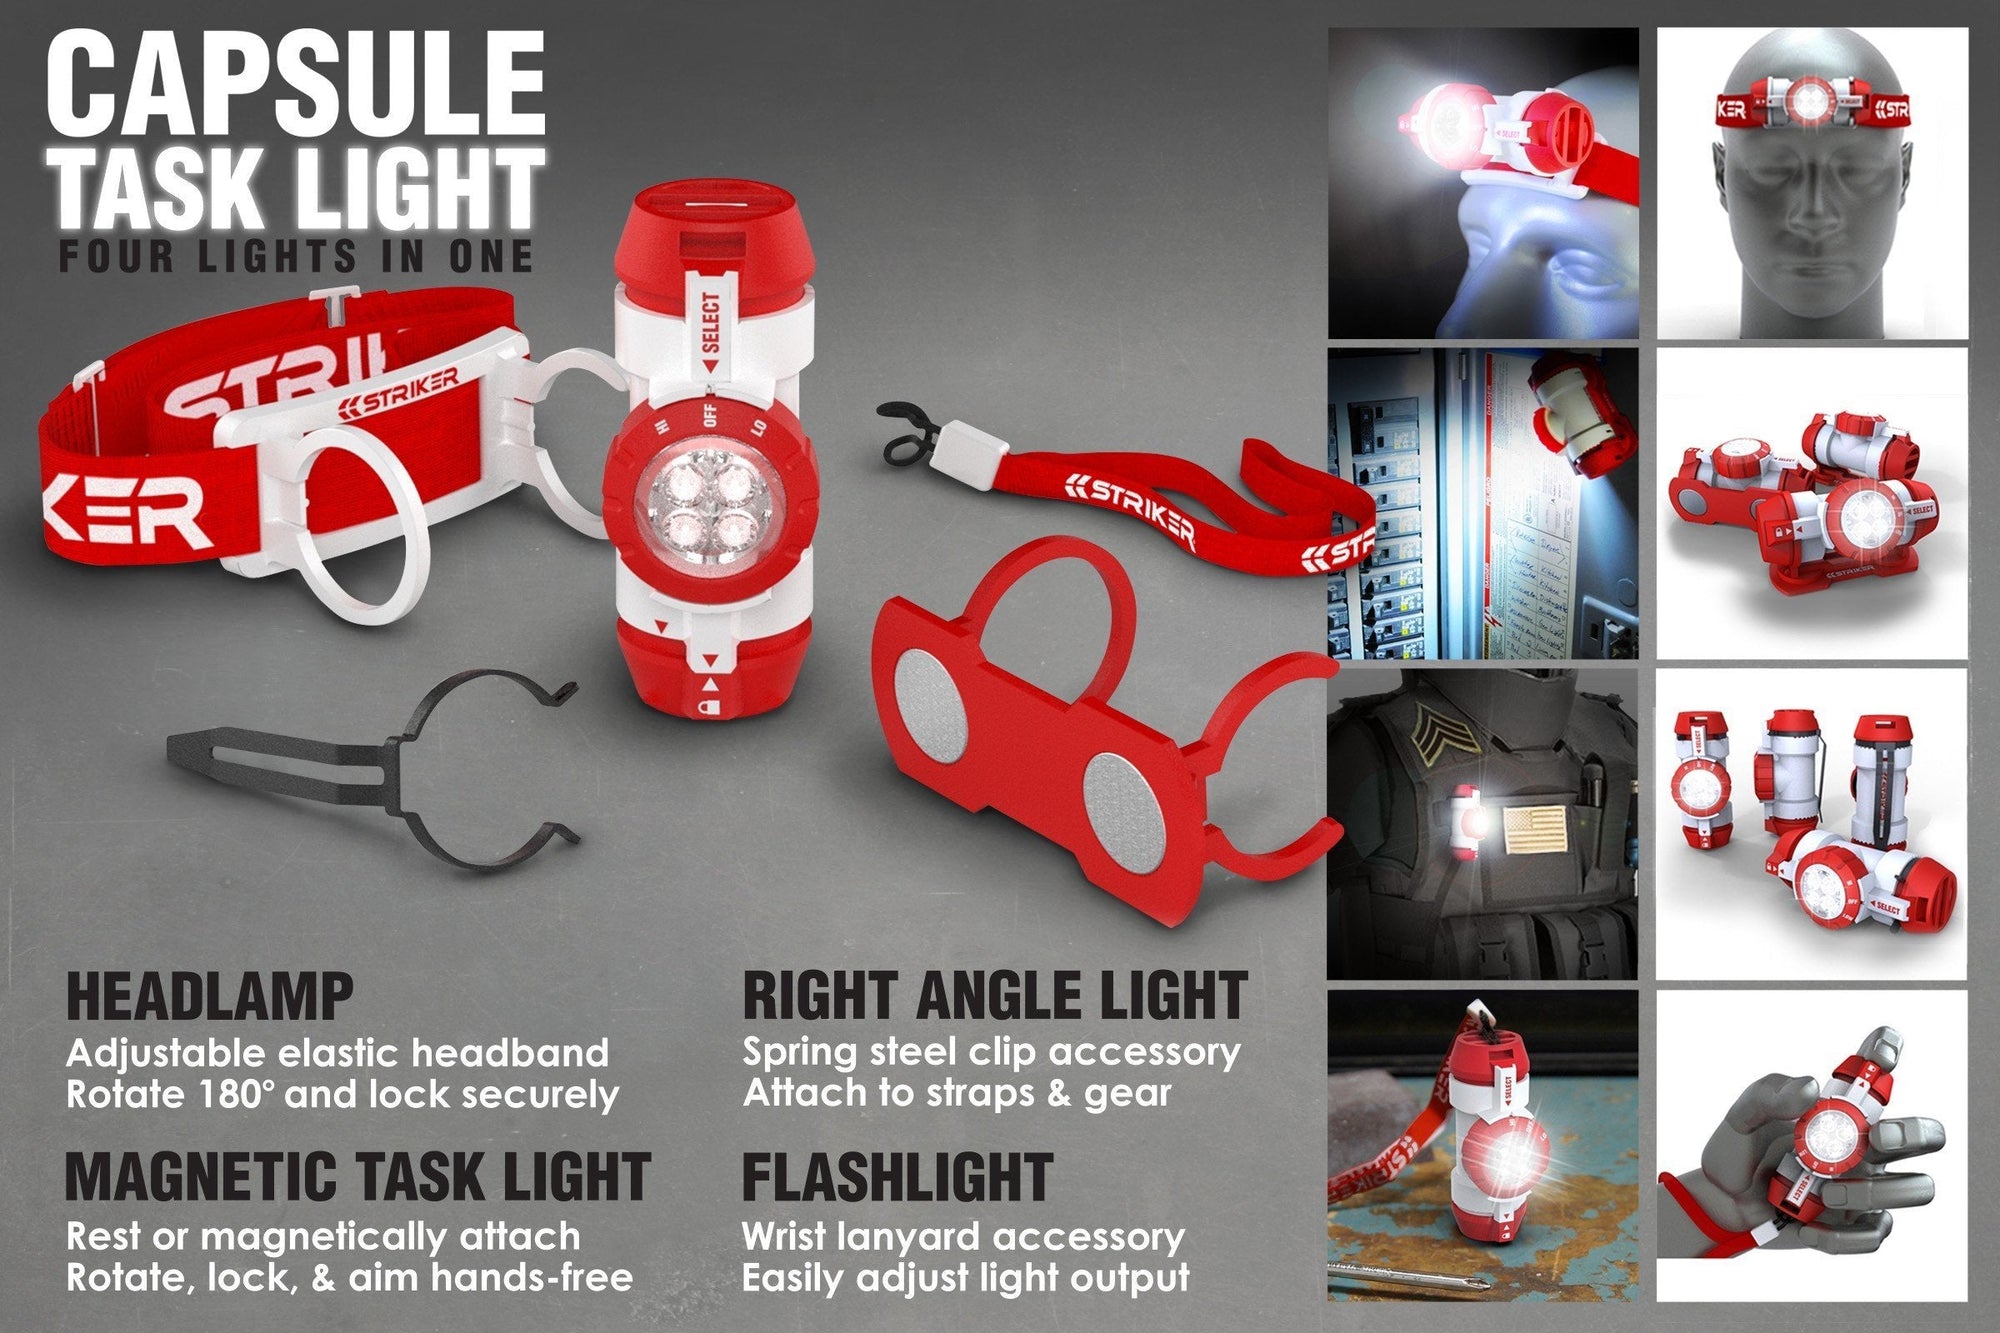 Capsule 4 in 1 flashlight / headlamp